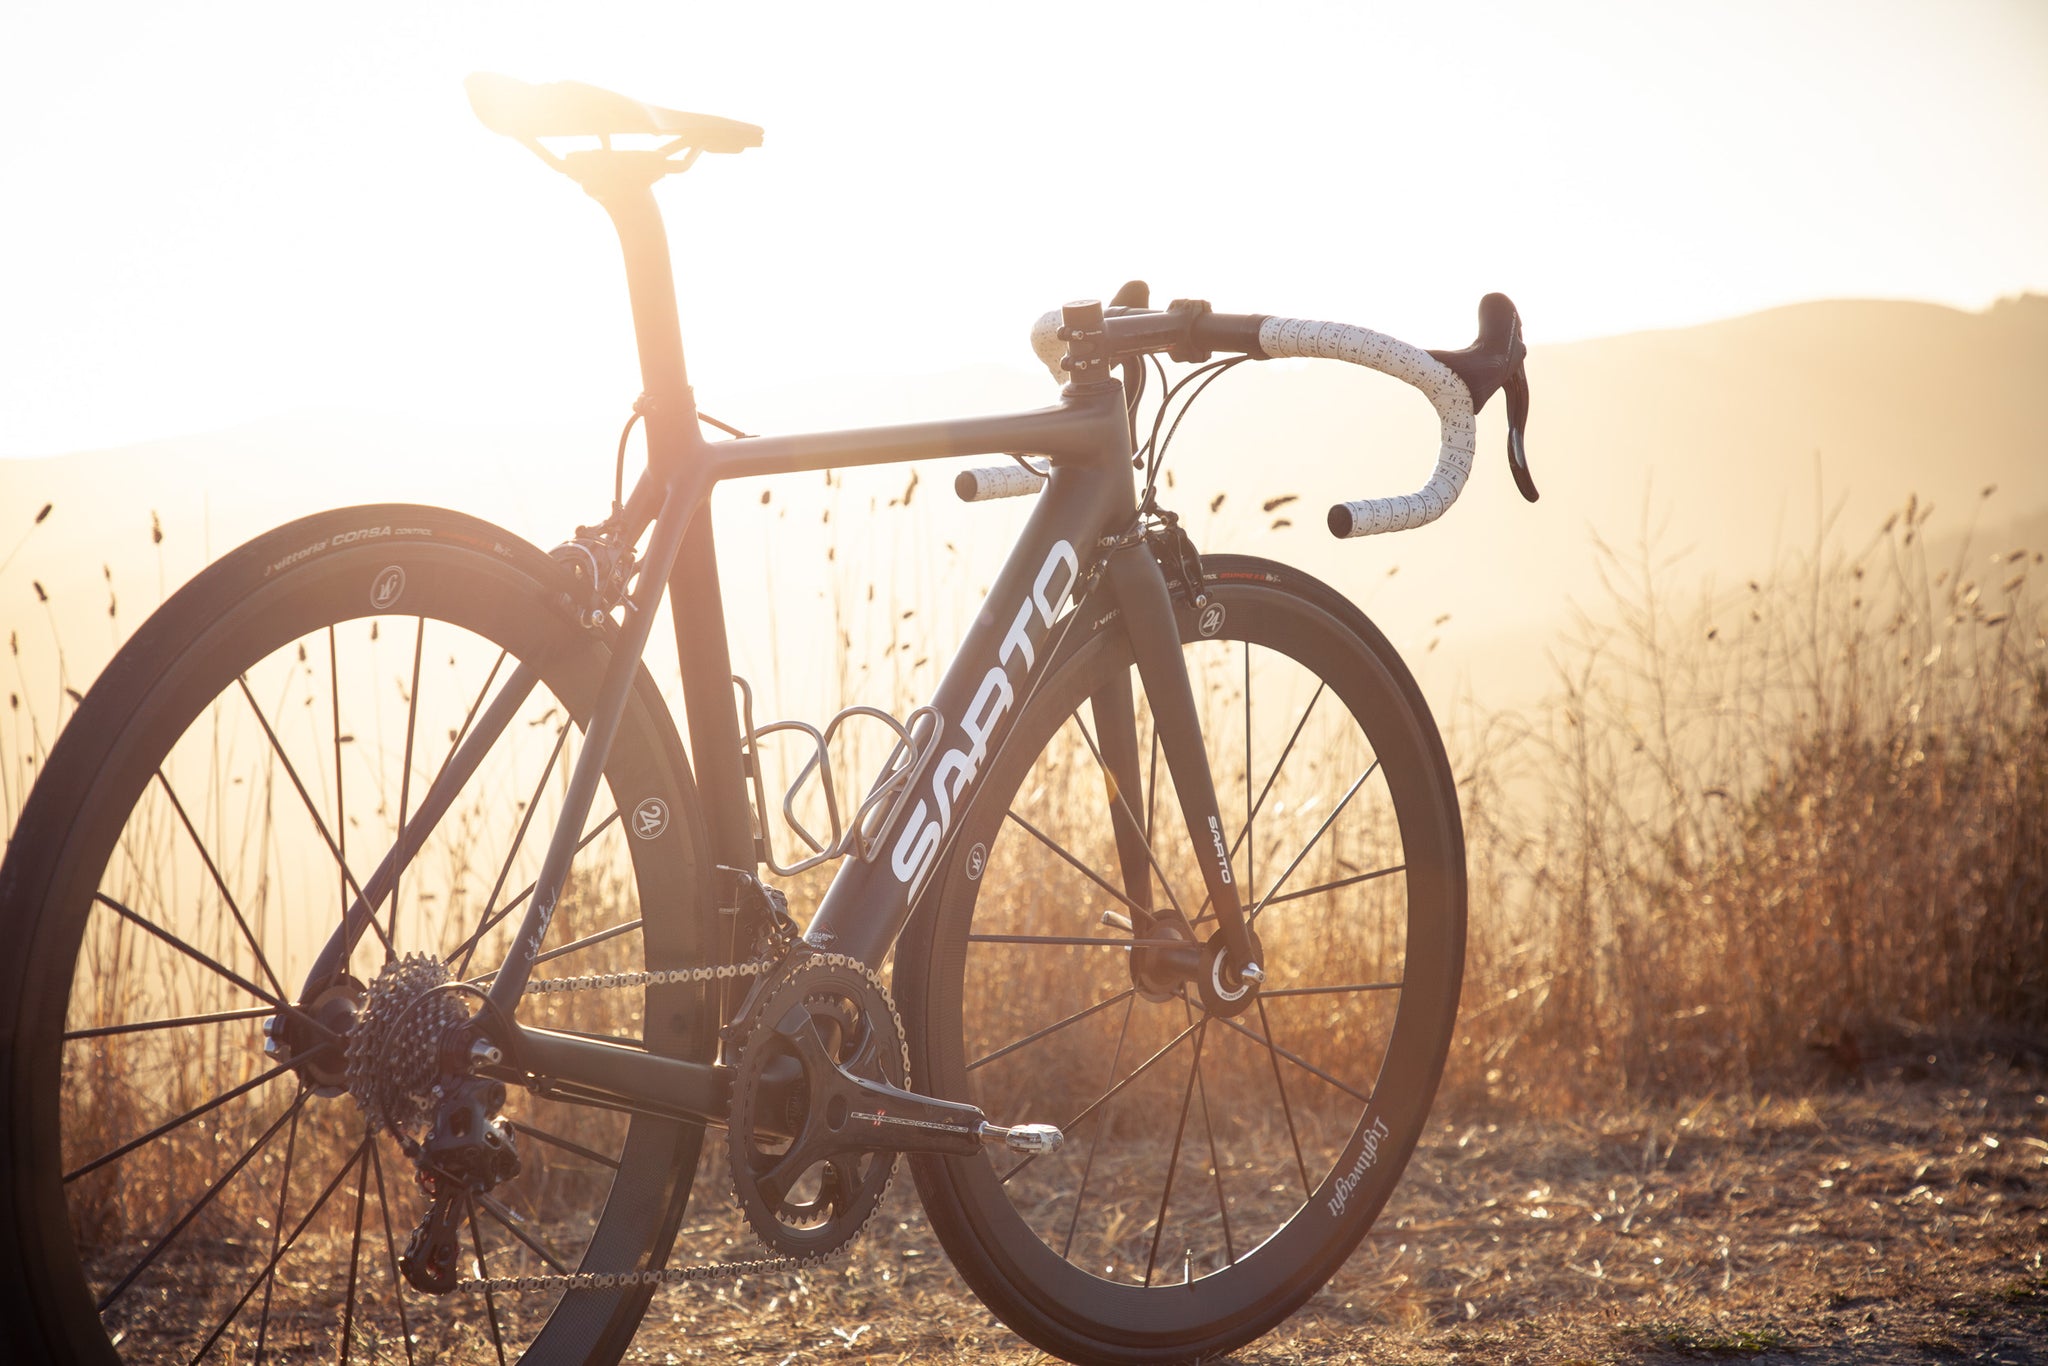 sarto dinamica chad bike profile sunset valley